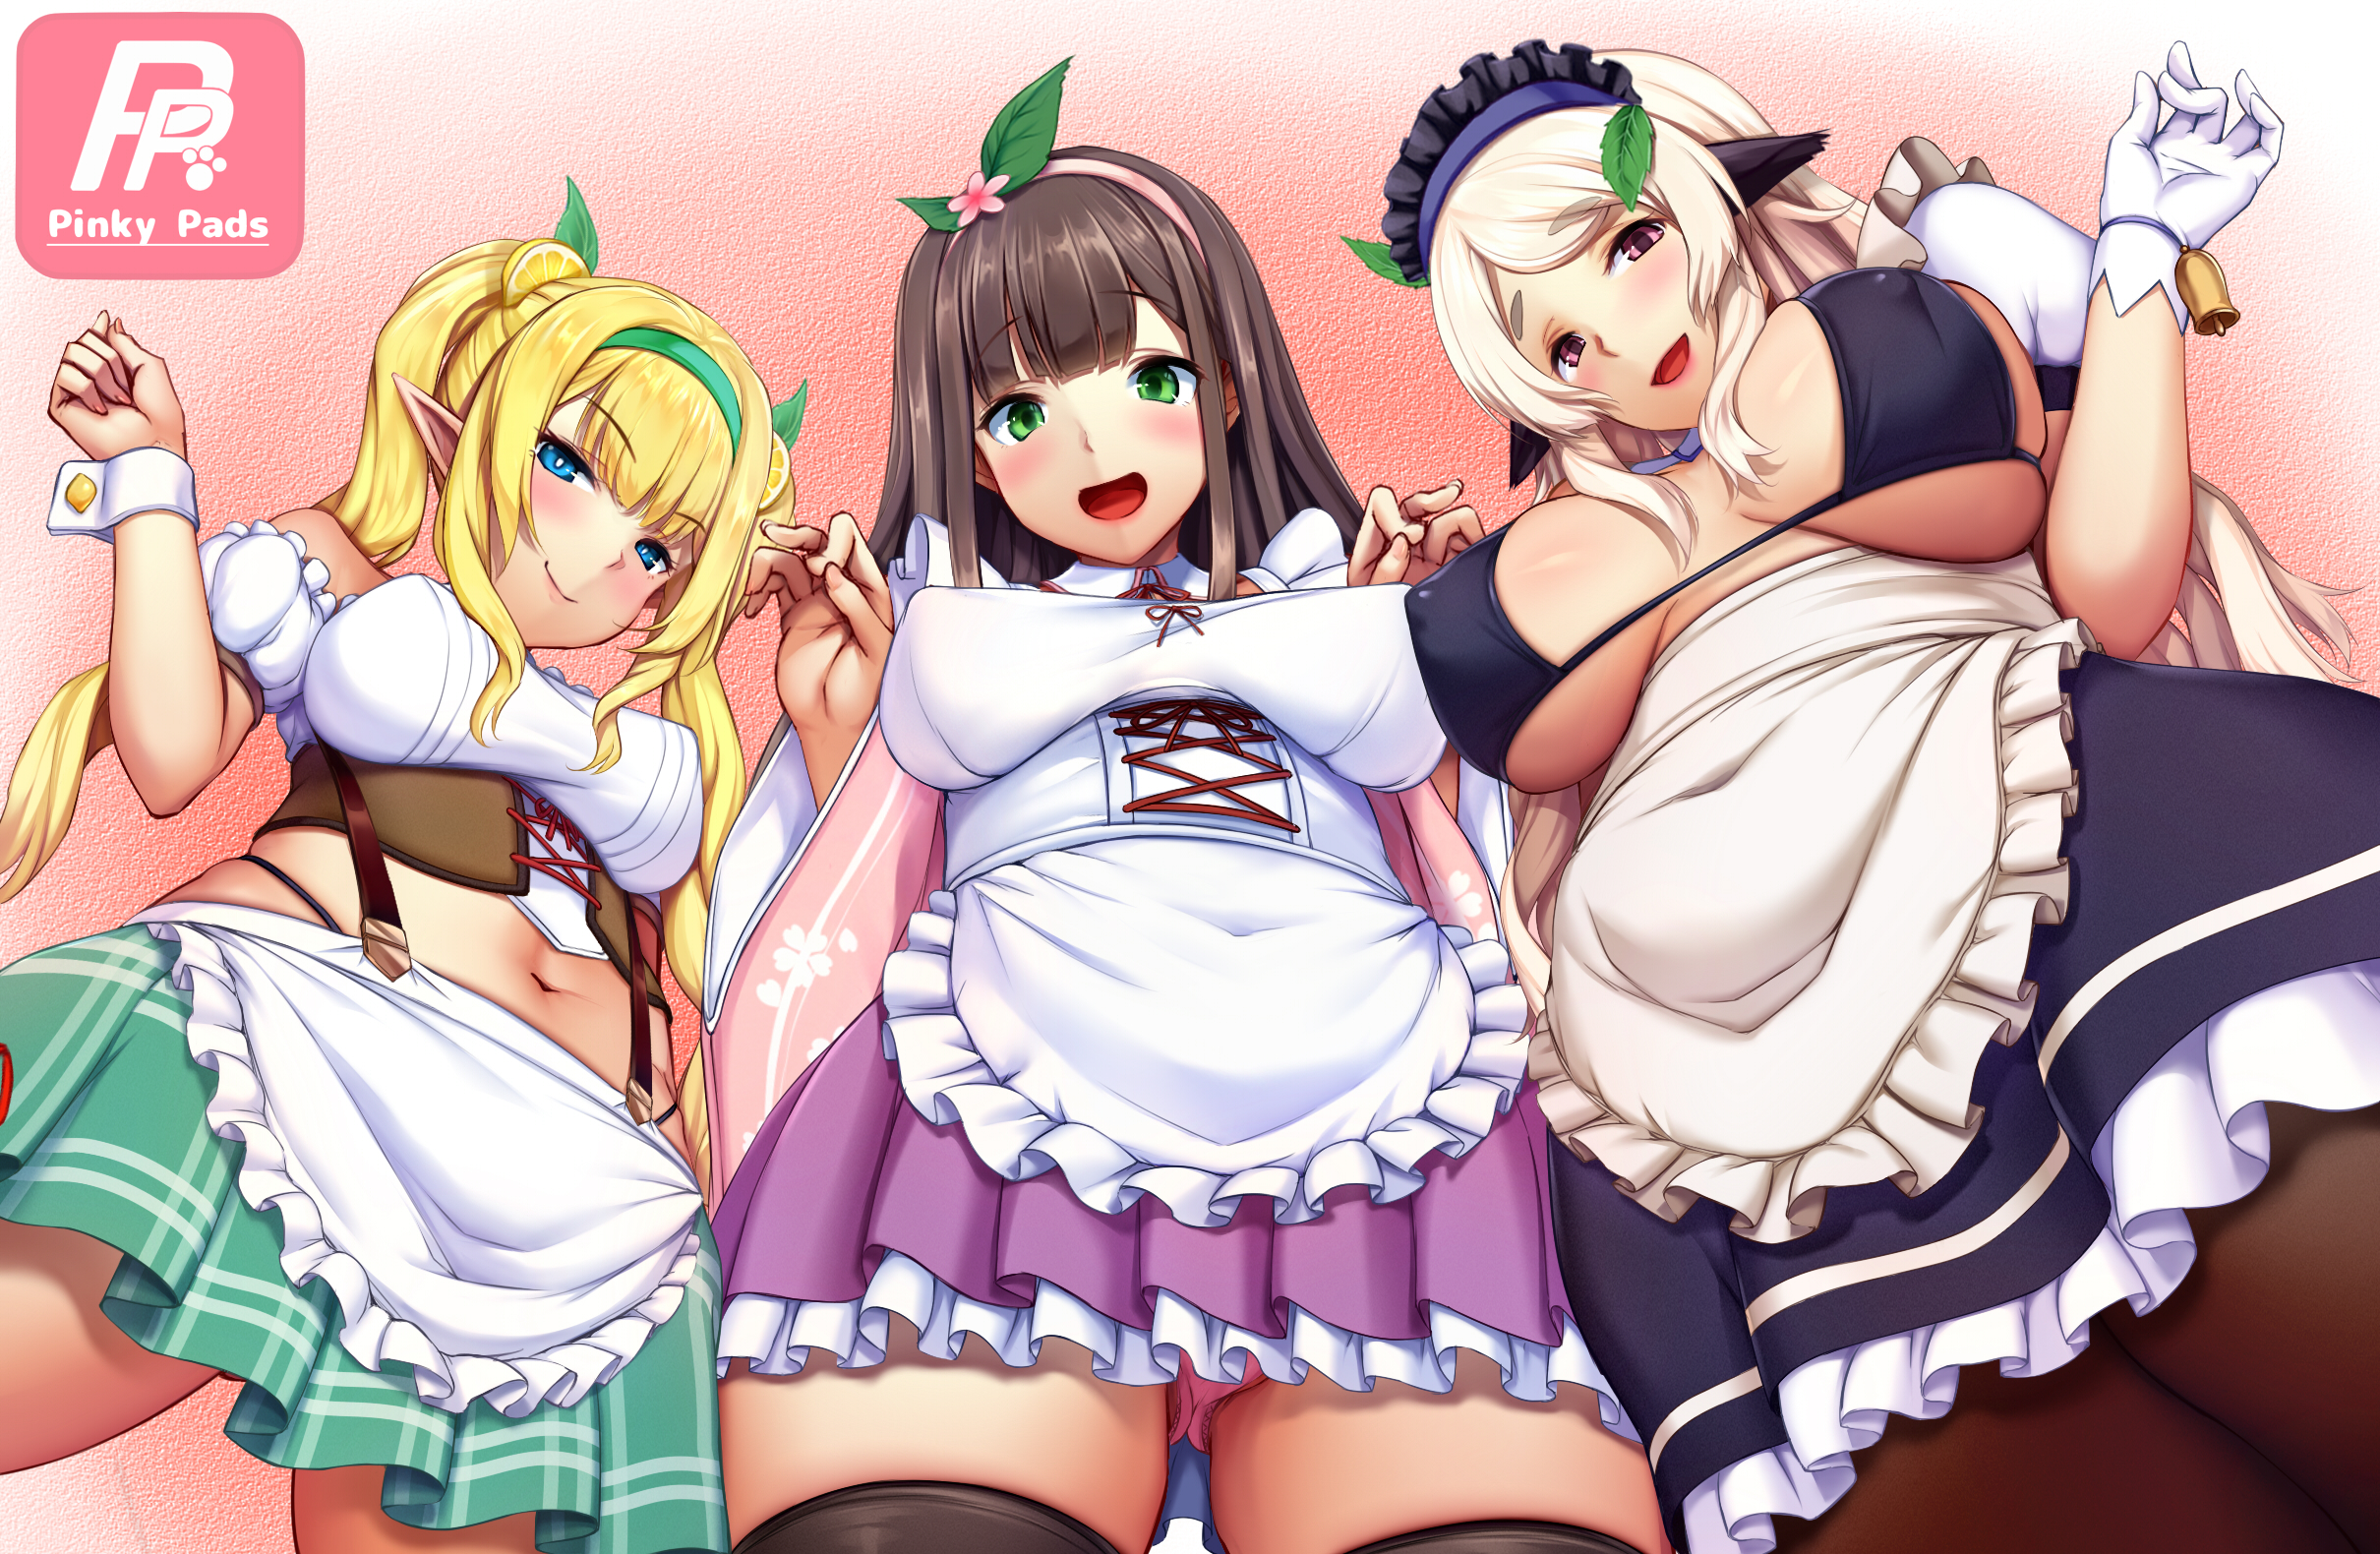 Tea Girls main image